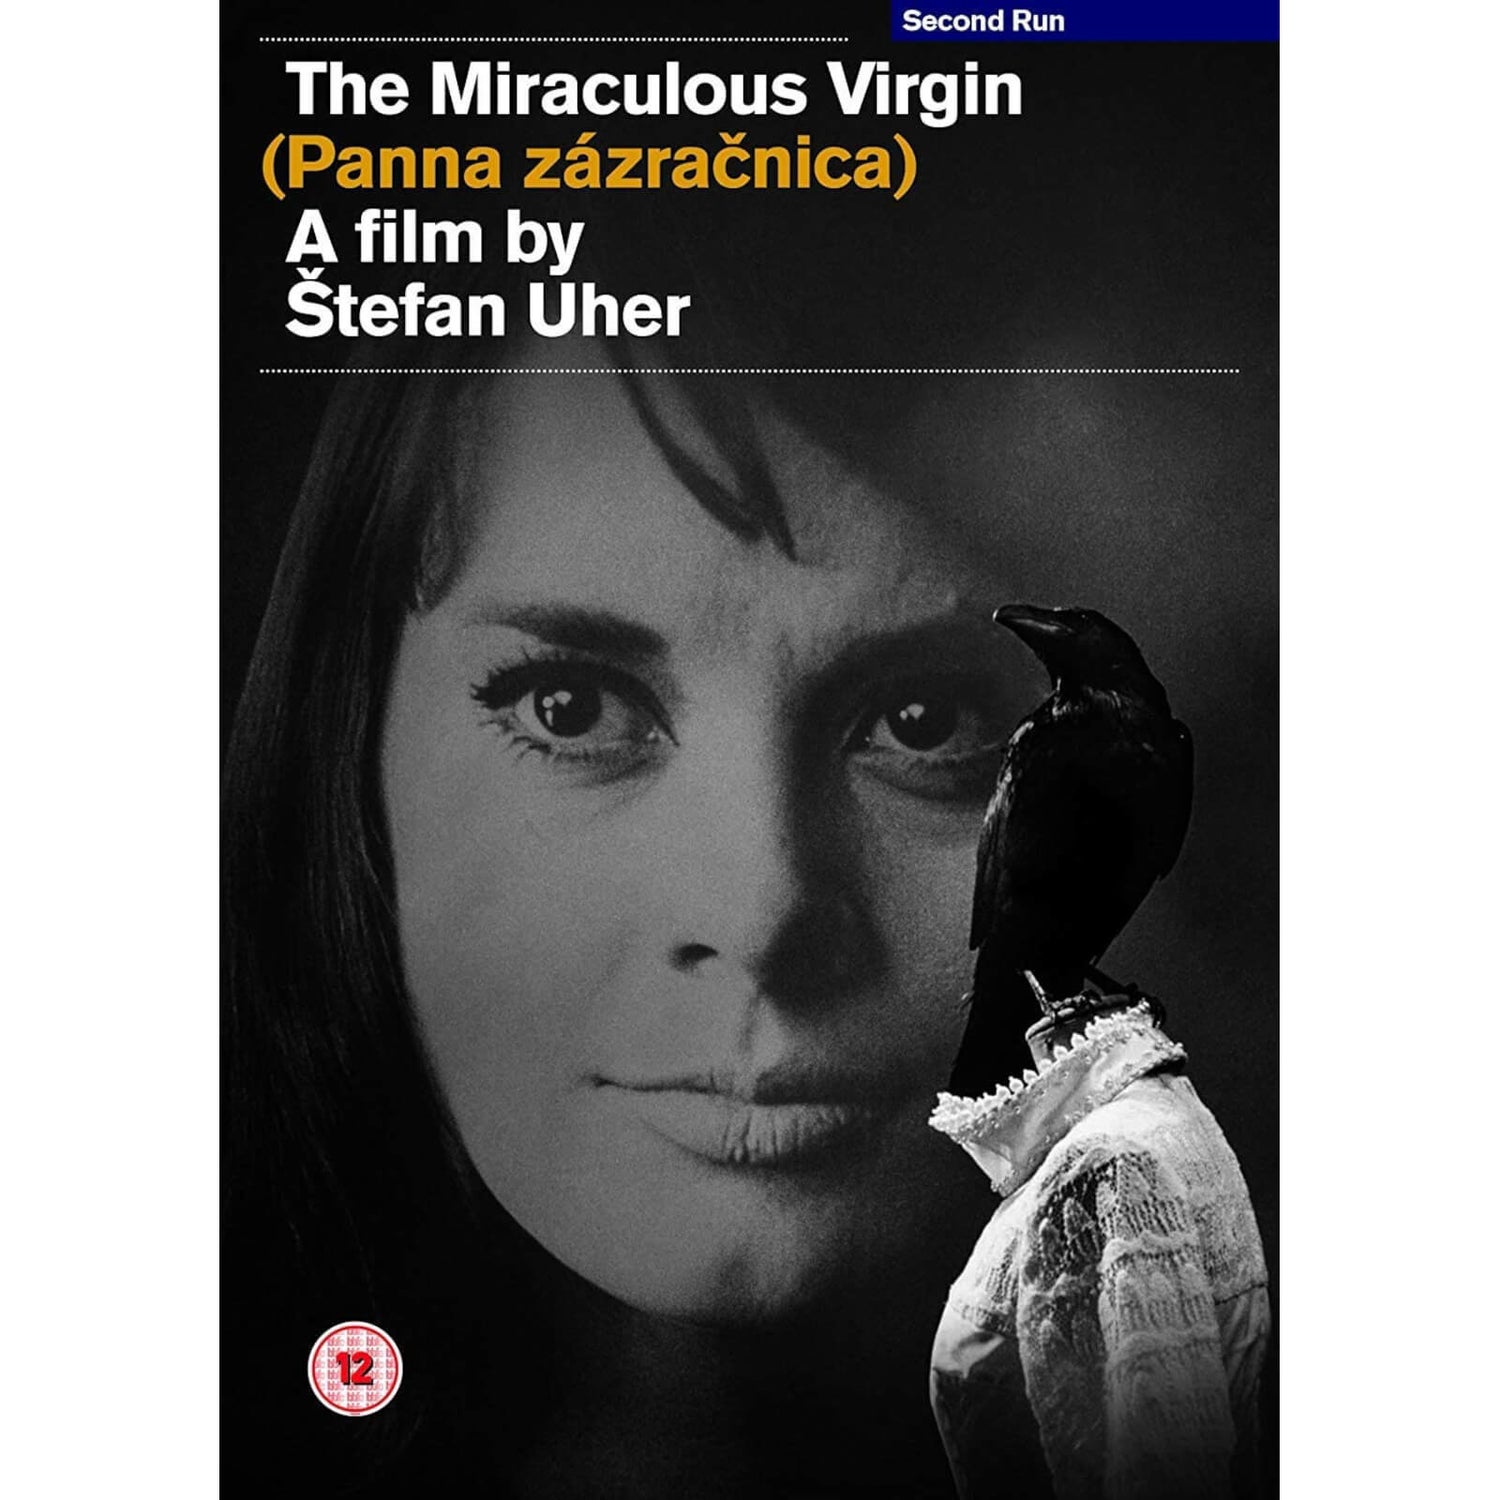 The Miraculous Virgin DVD